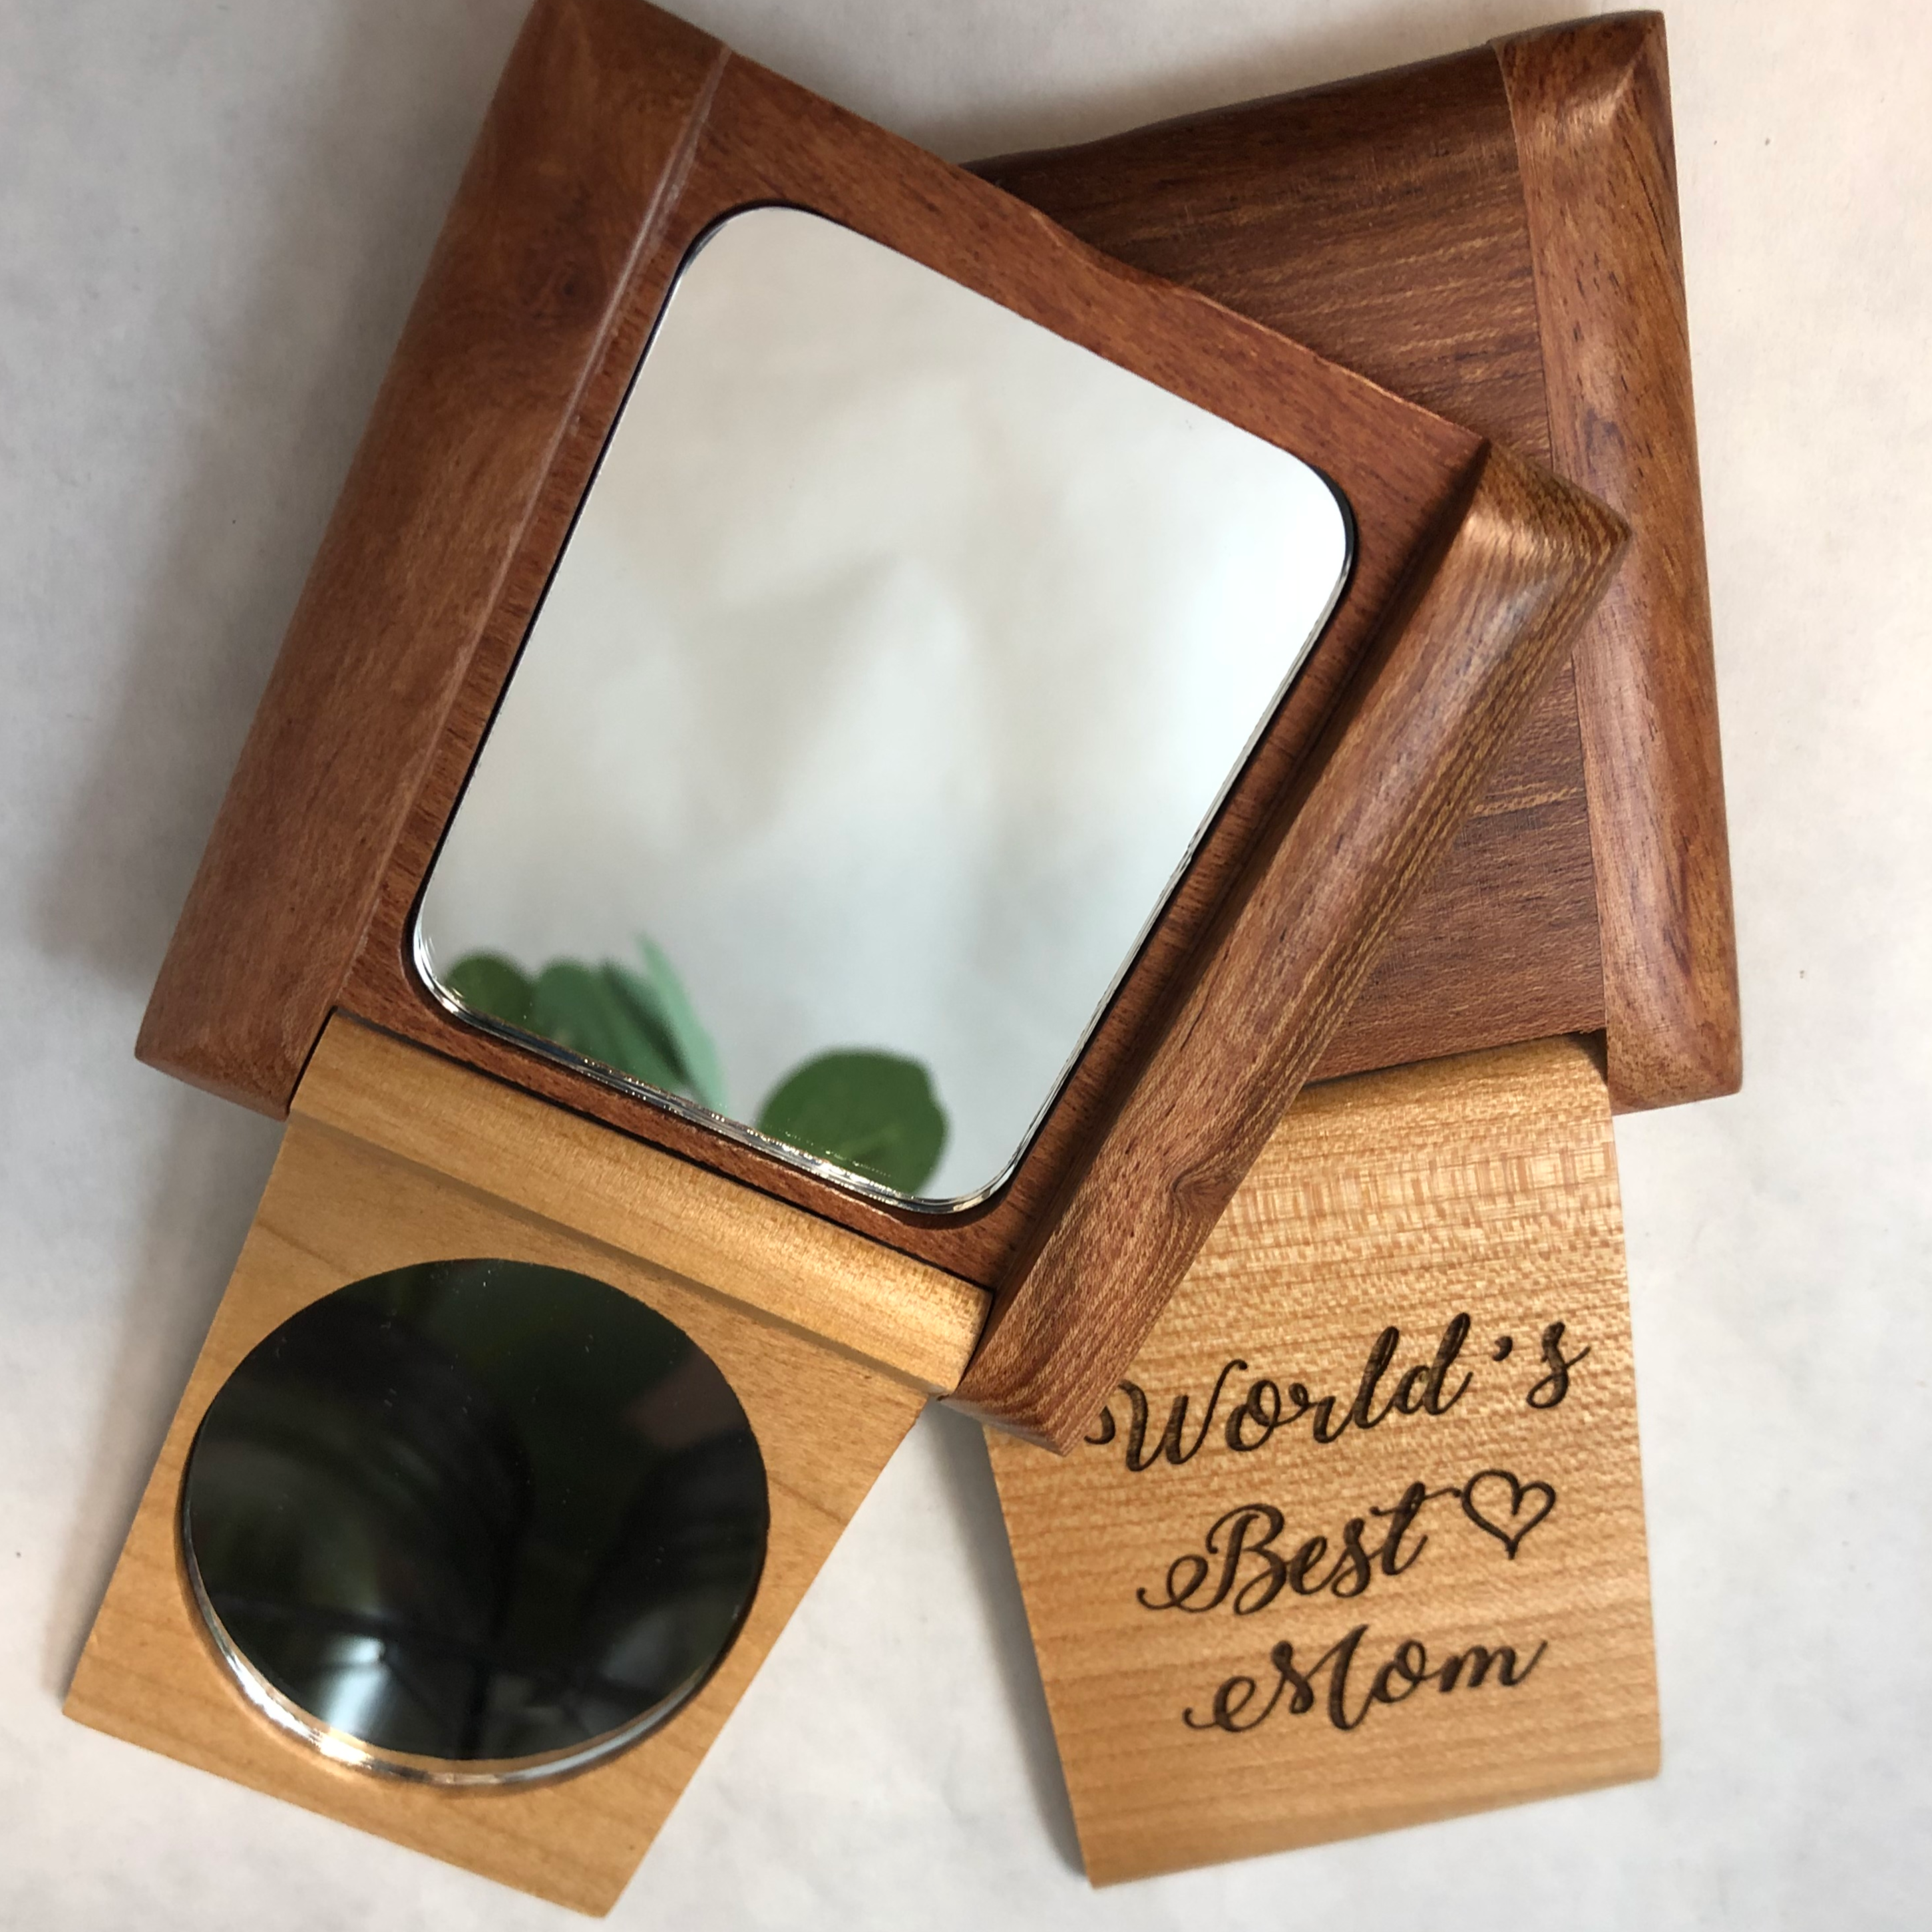 New wide strip Crushed jewel wall mirror loose diamante home decor mirror  gift | eBay